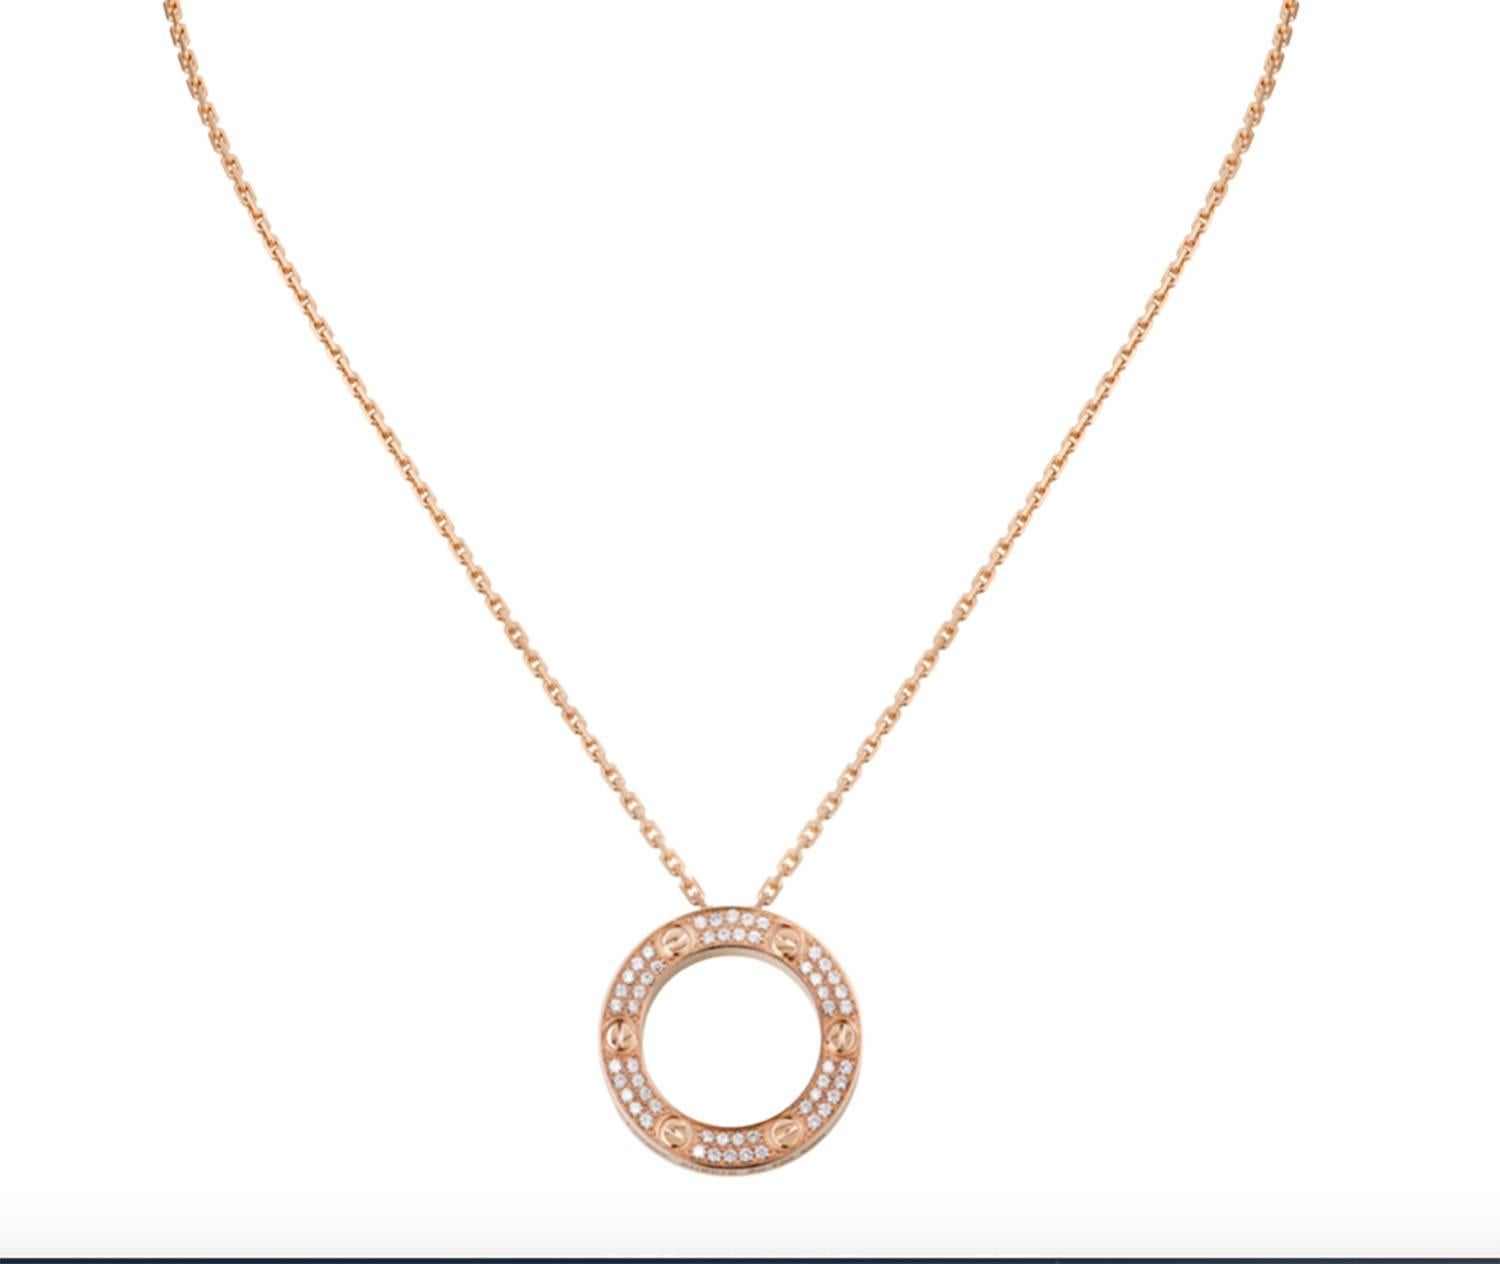 Cartier Love necklace, 18K pink gold, set with 54 brilliant-cut diamonds.